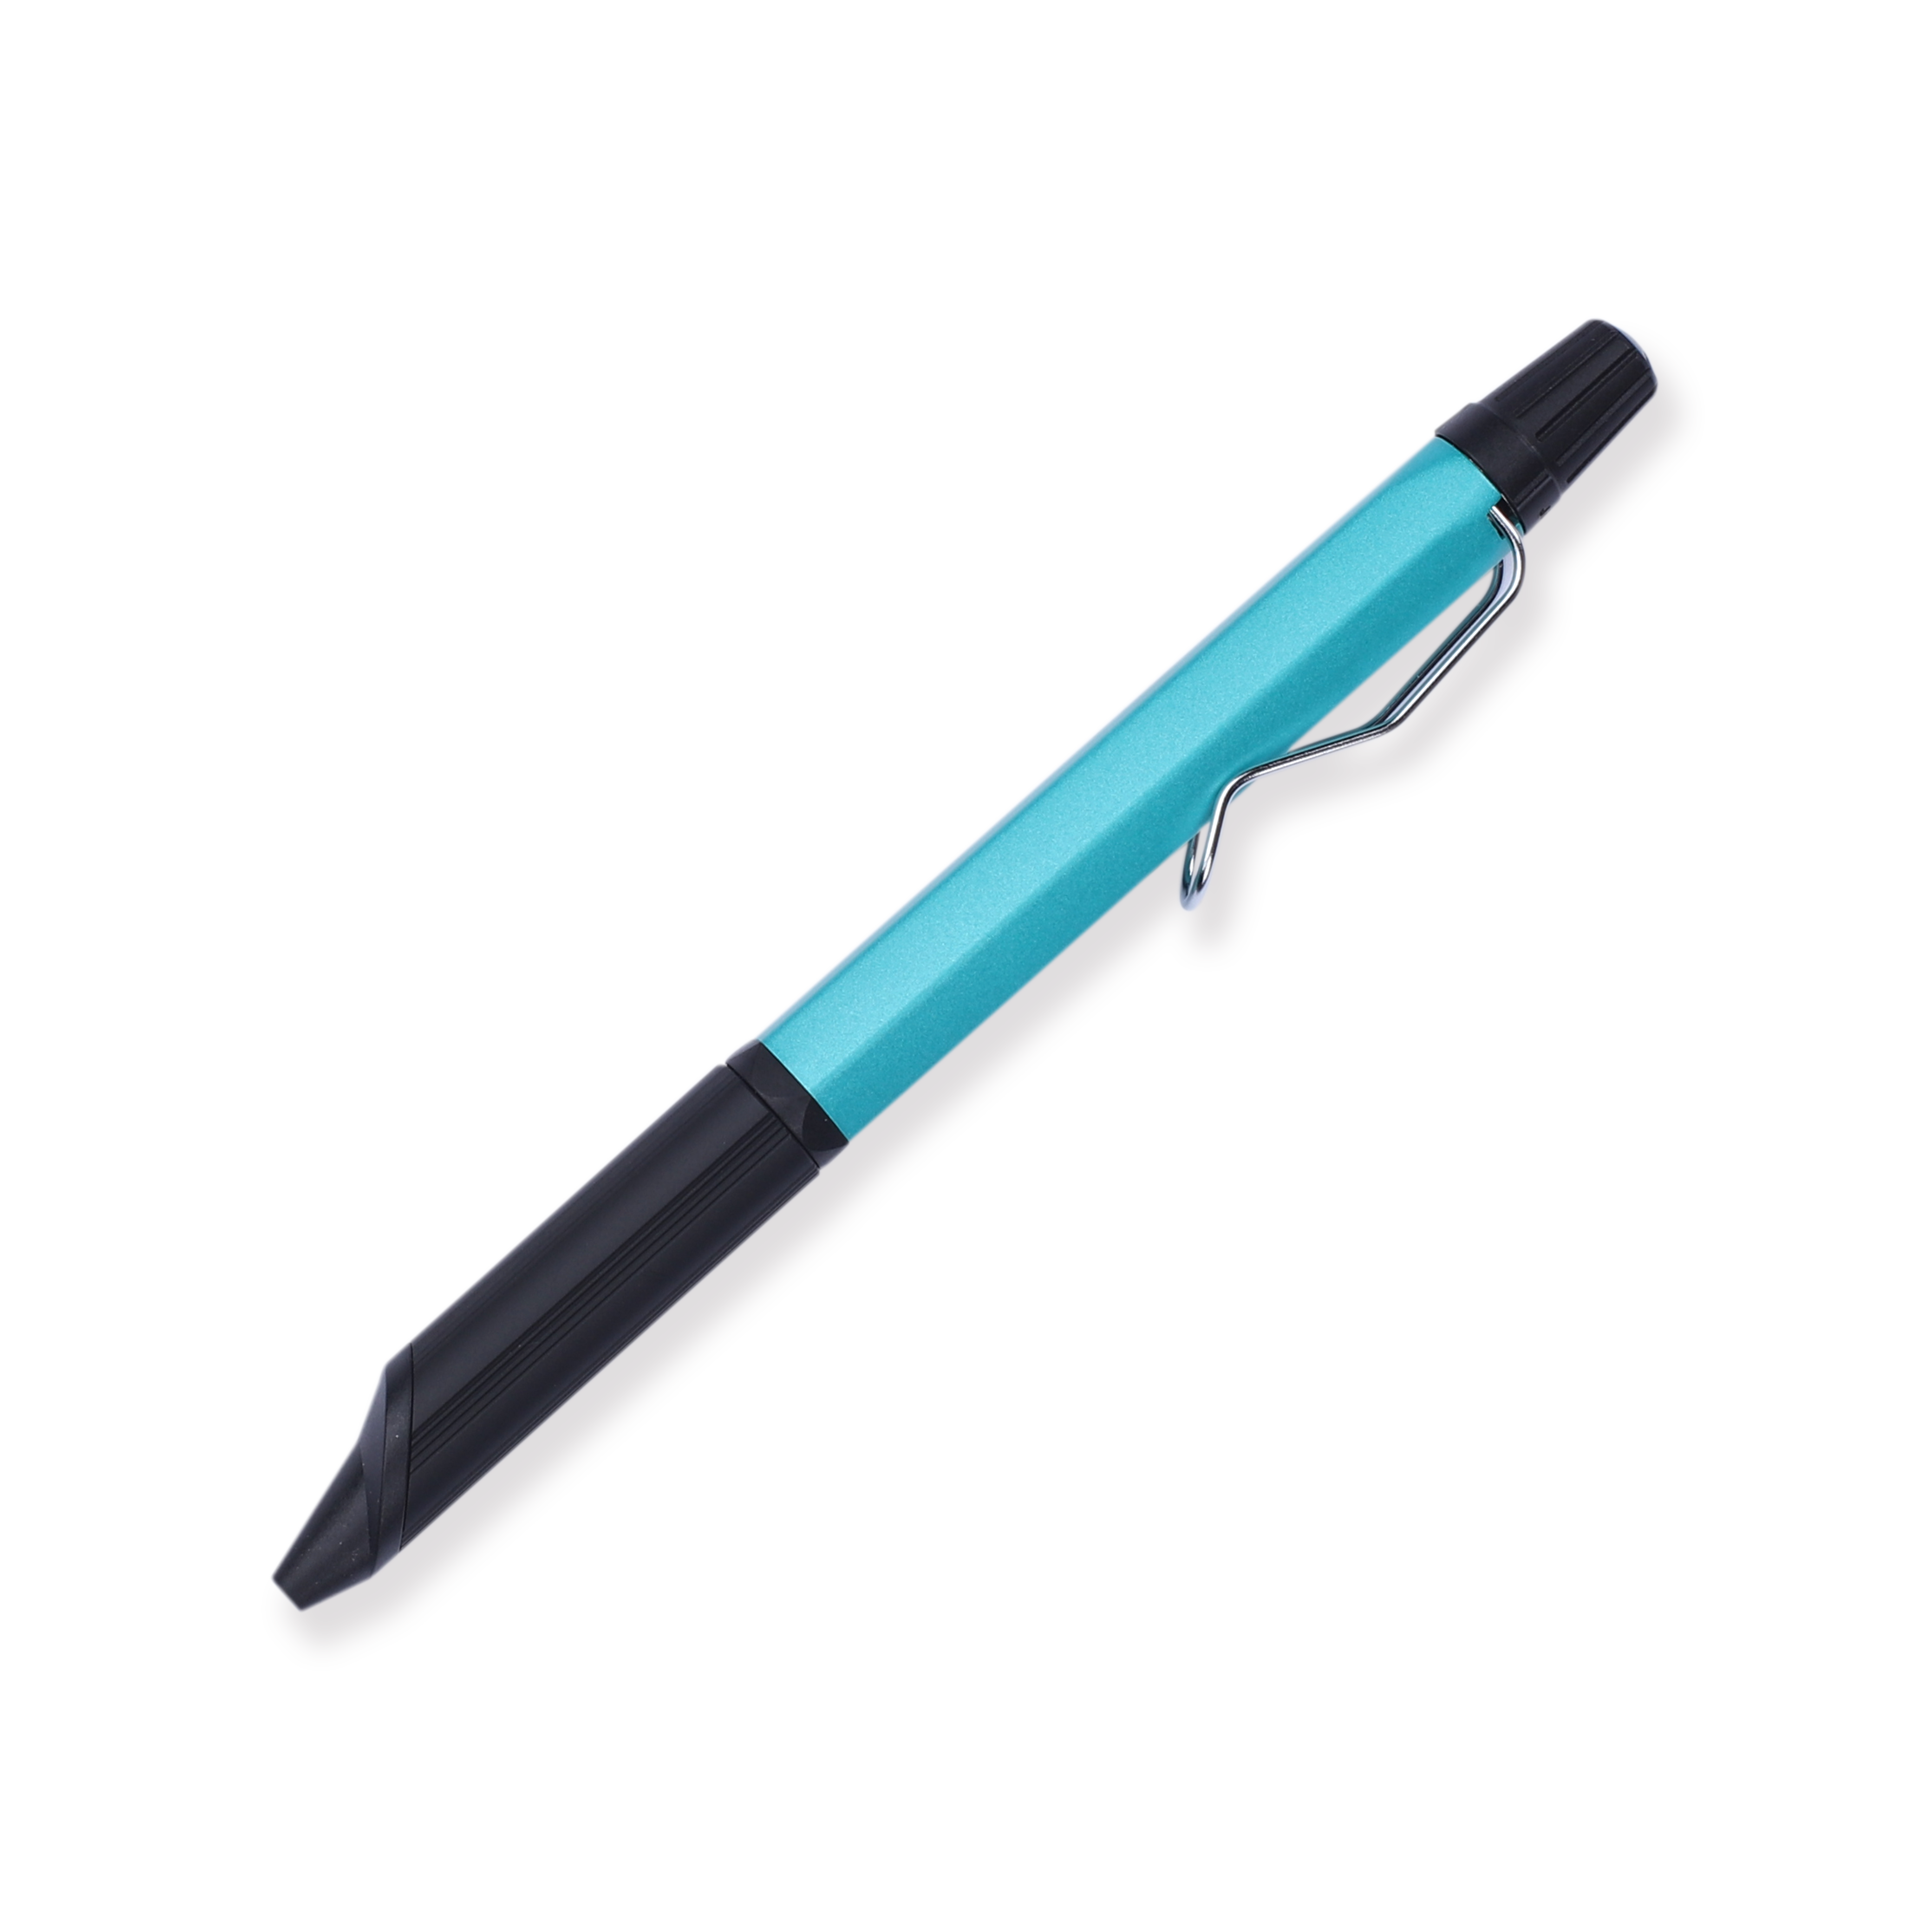 Uni Jetstream Edge 3 Multi Function Pen - 0.28 mm-Turquoise Body